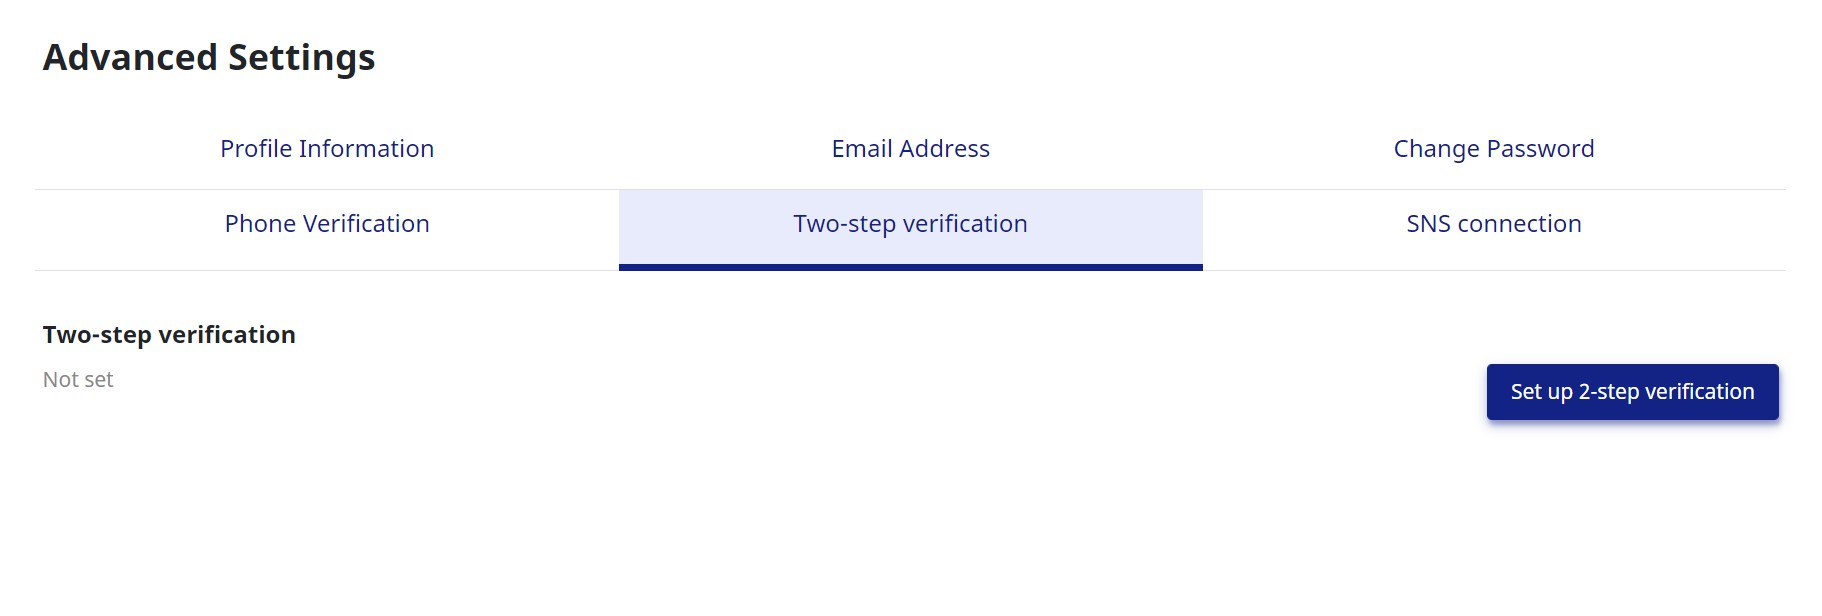 Advanced_Settings_2-step_verification1.jpg